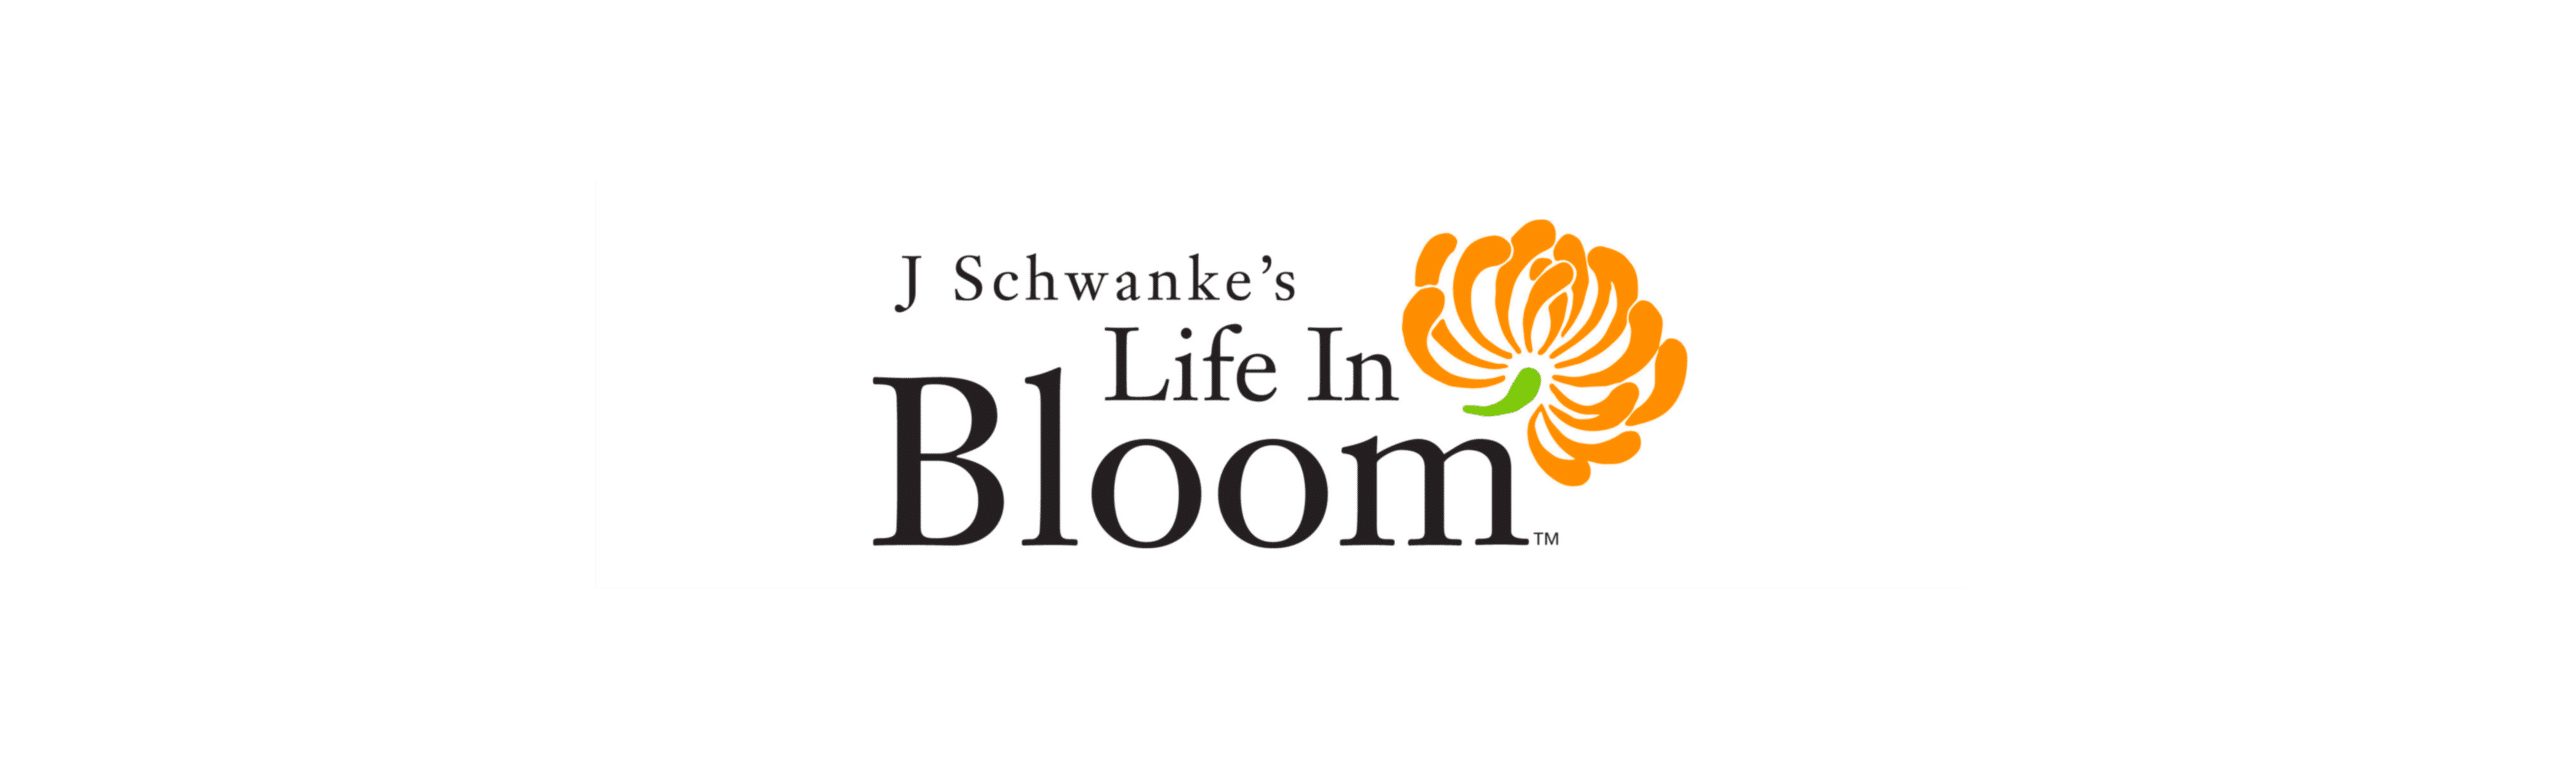 life in bloom viewers